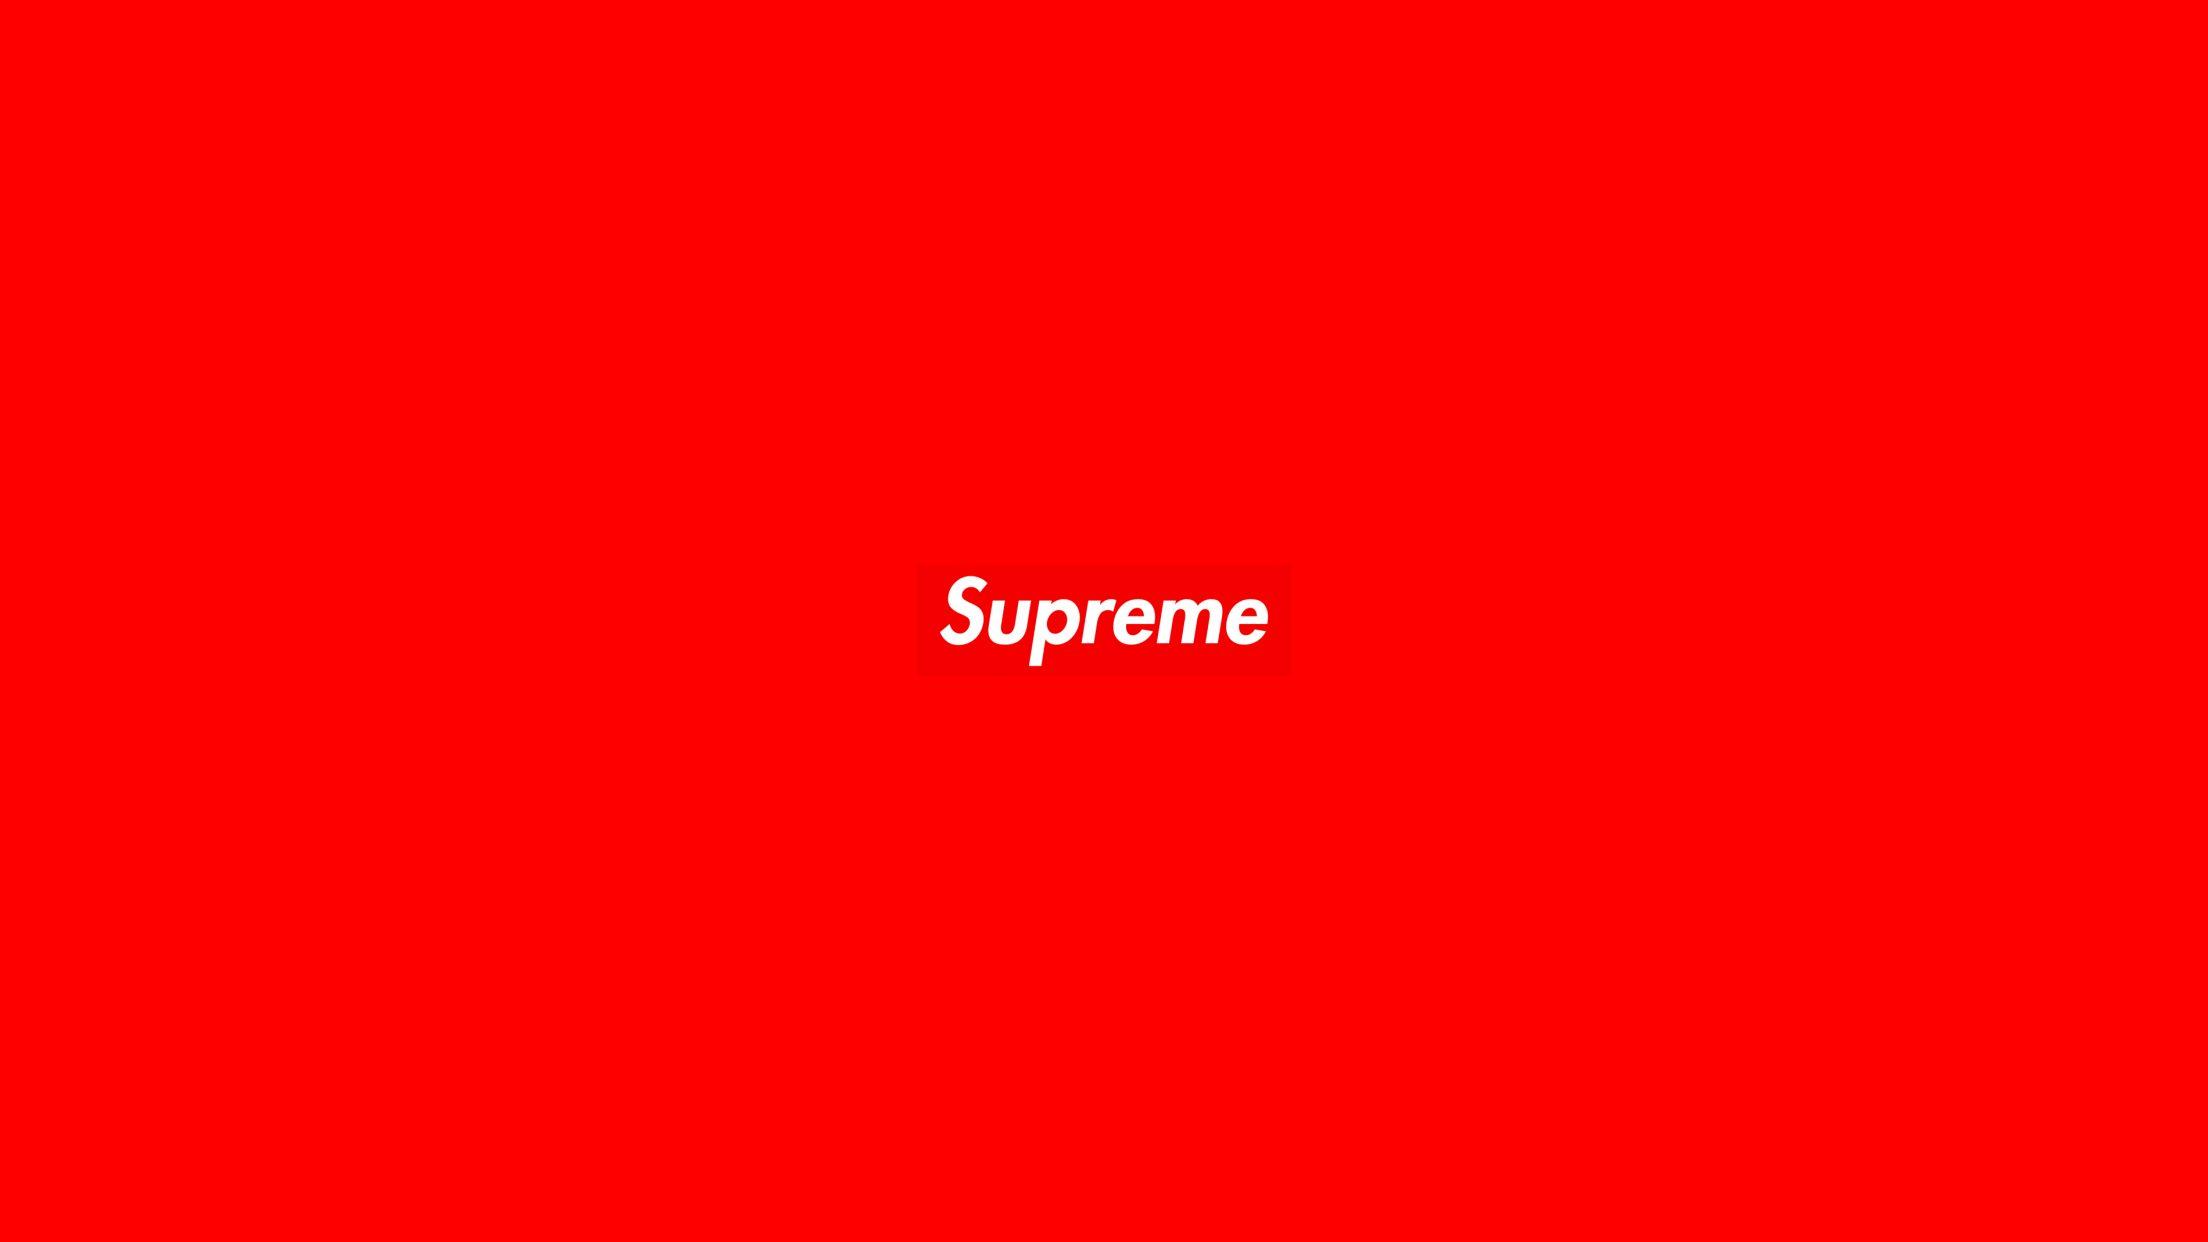 4K Wallpaper Of The Supreme Clothing Brand's Logo